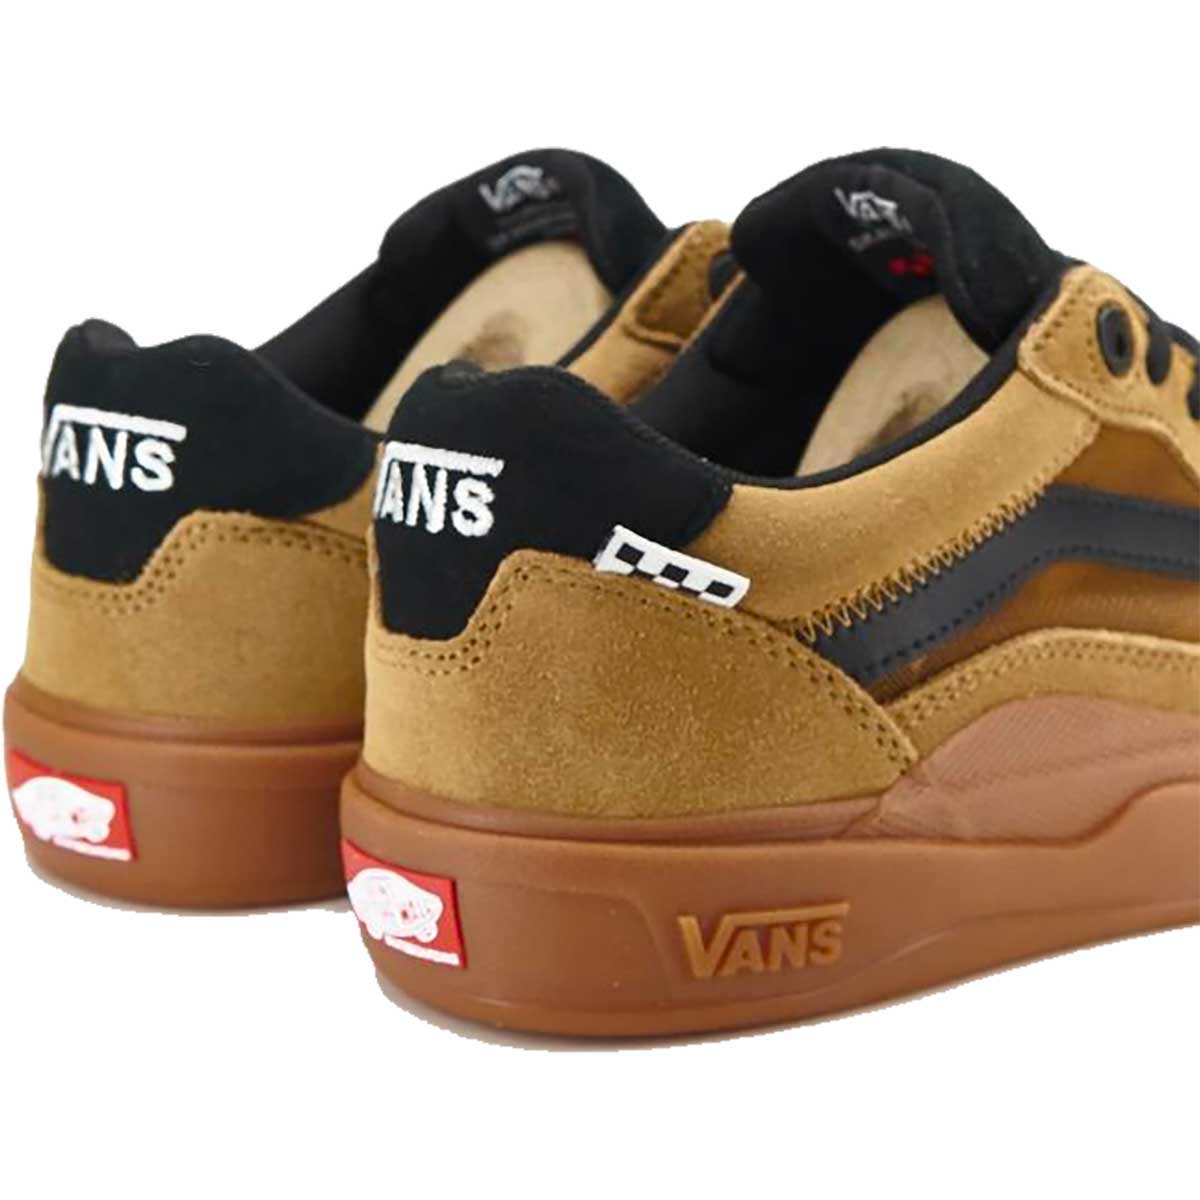 Vans Wayvee Shoe - Tobacco/Brown - Antisocial